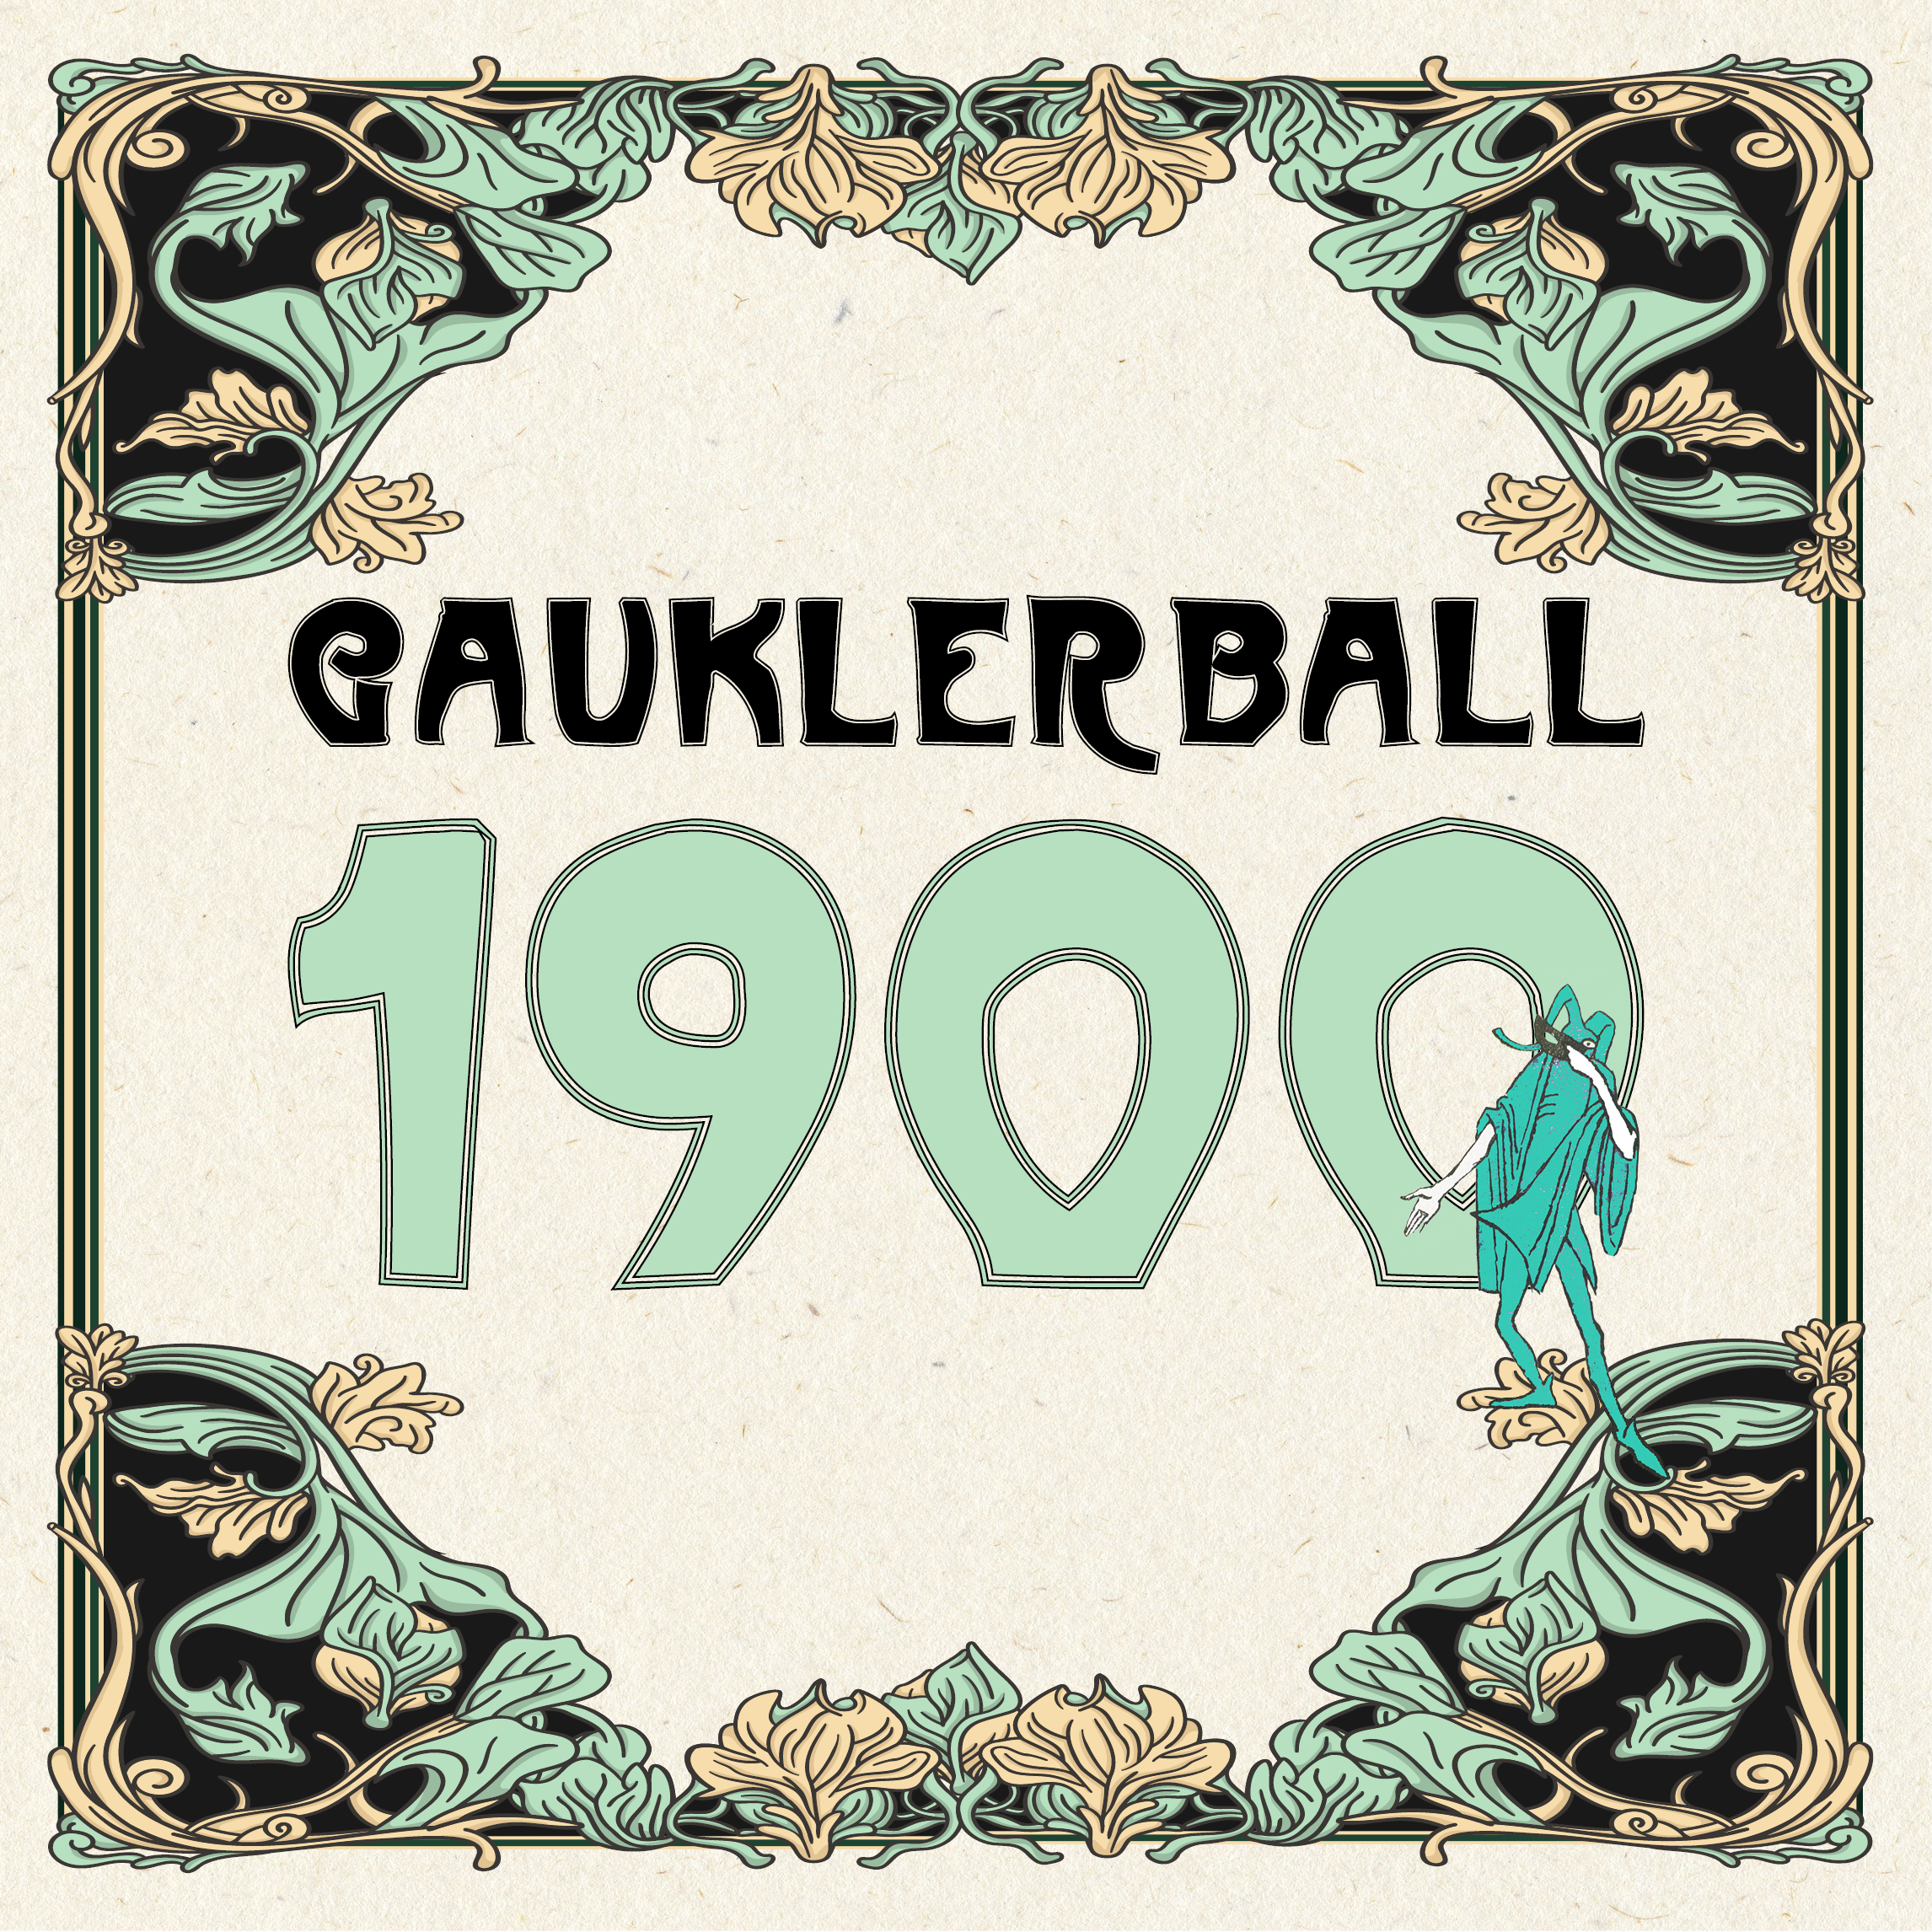 Gauklerball: Die Gaukler um 1900 